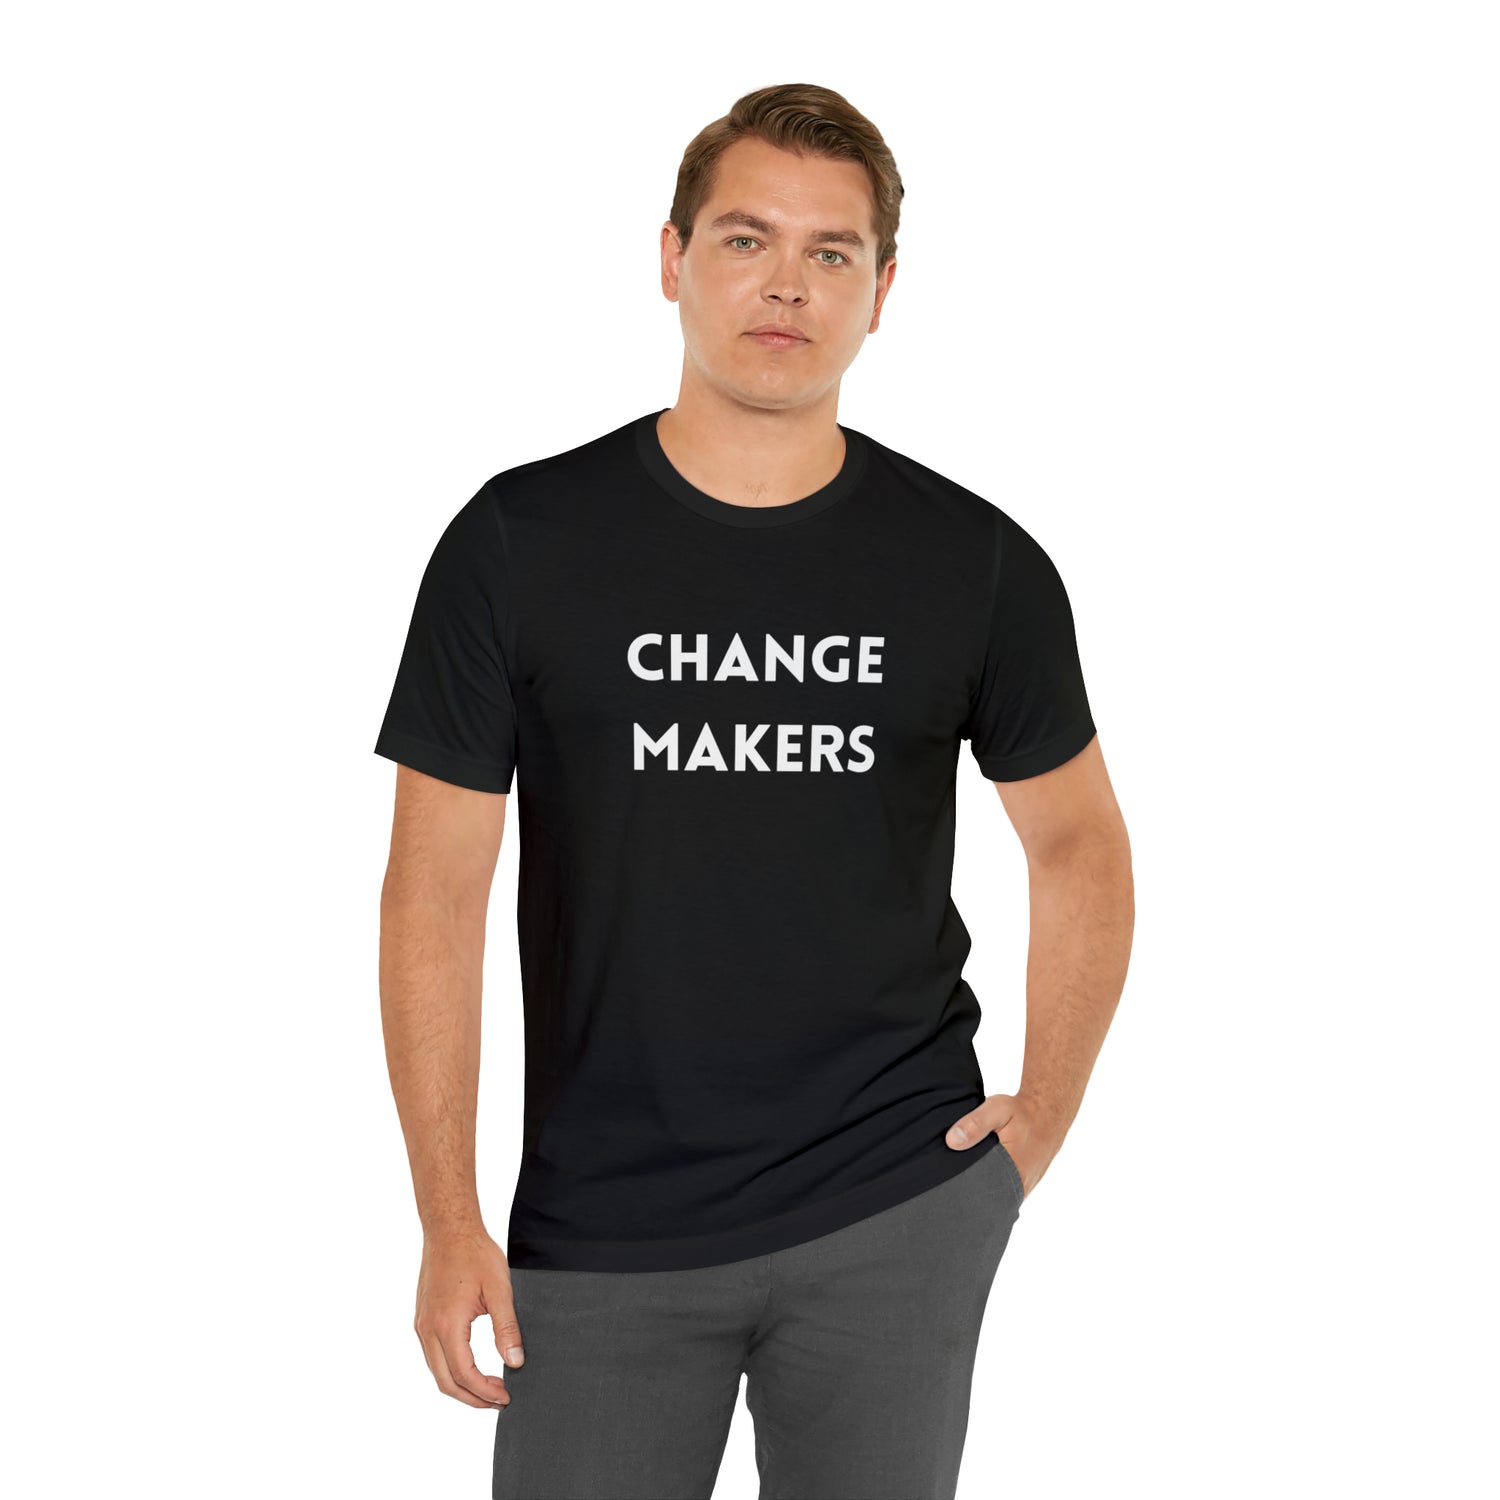 Inspirational T-Shirt About Change | For Change Maker T-Shirt Petrova Designs